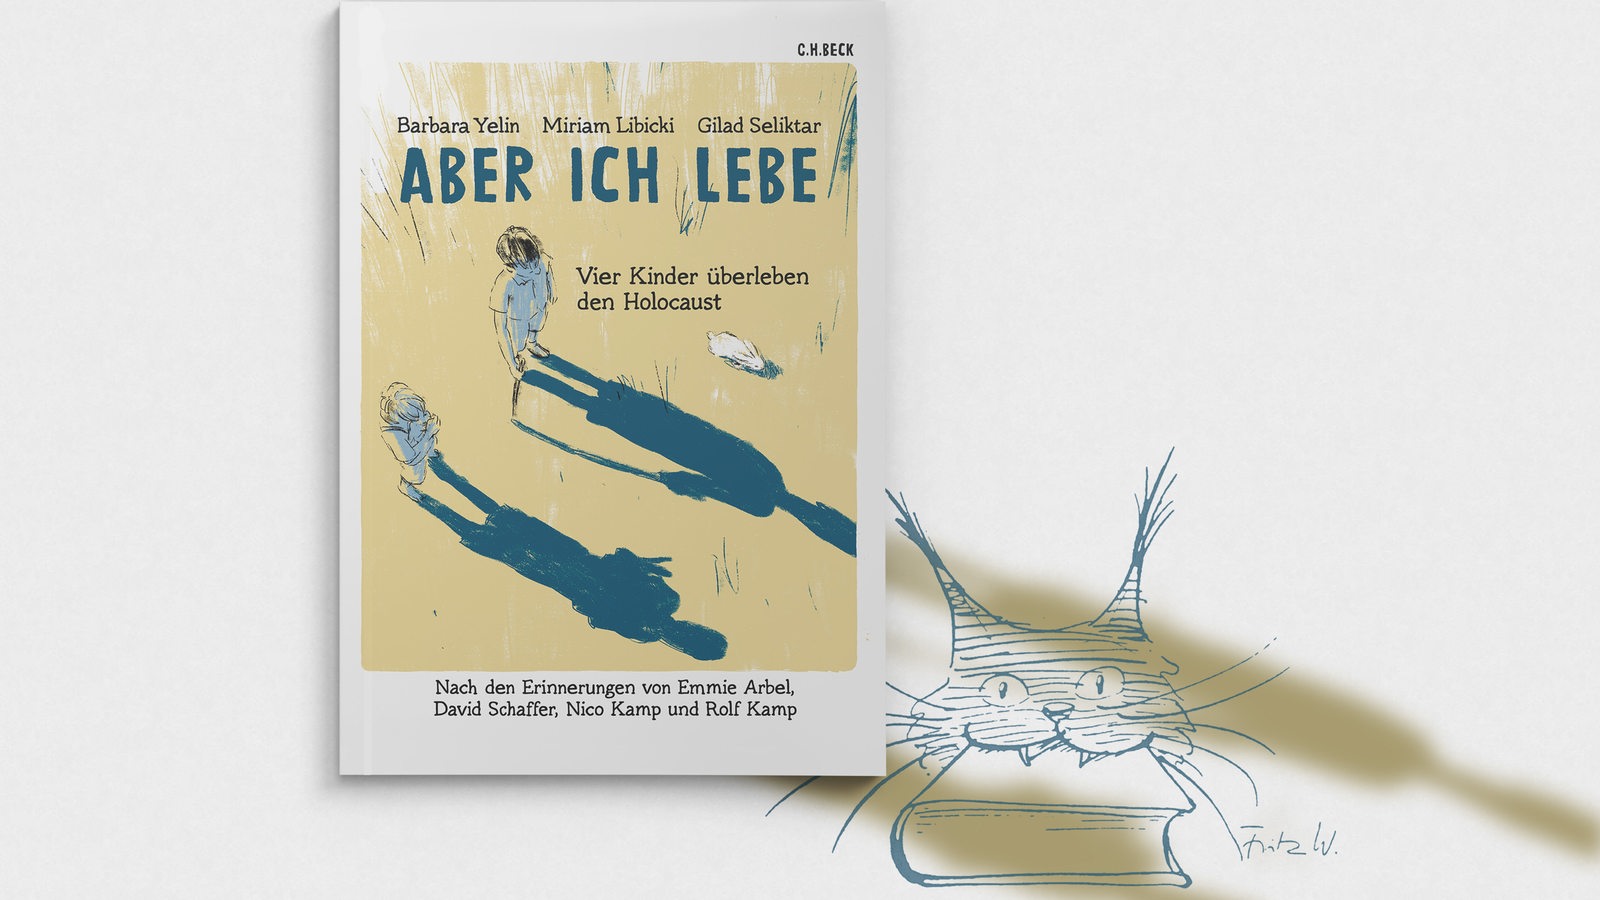 Cover: Barbara Yelin, Miriam Libicki, Gilad Seliktar "Aber ich lebe", C.H. Beck, 25 Euro.